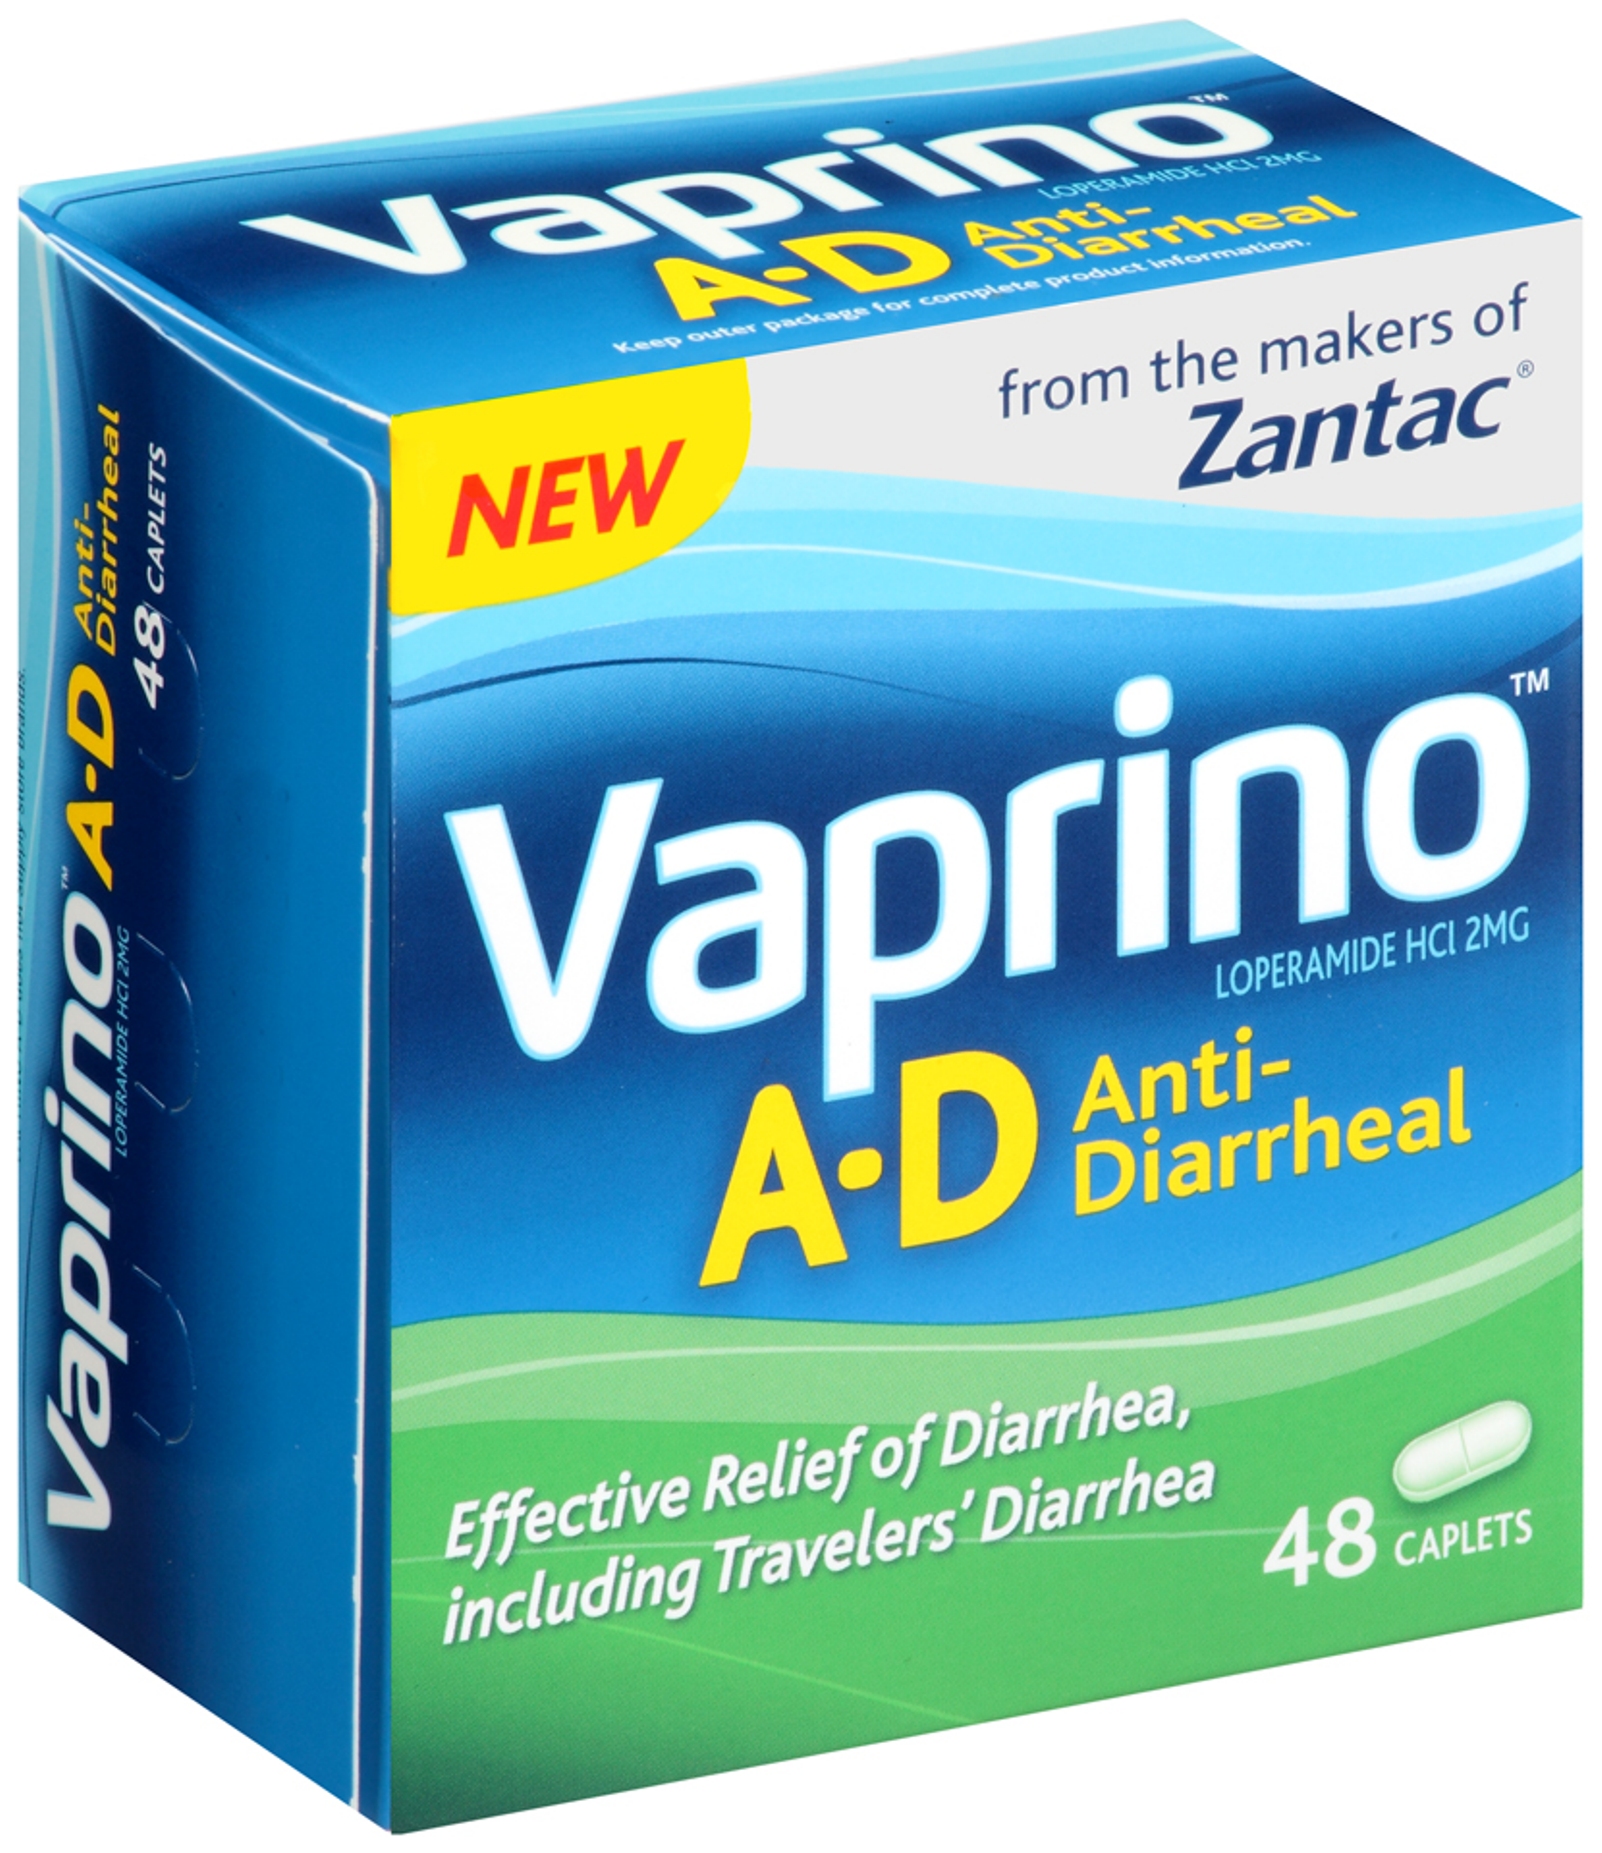 Zantac Vaprino Anti-Diarrheal Loperamide HCl 2mg